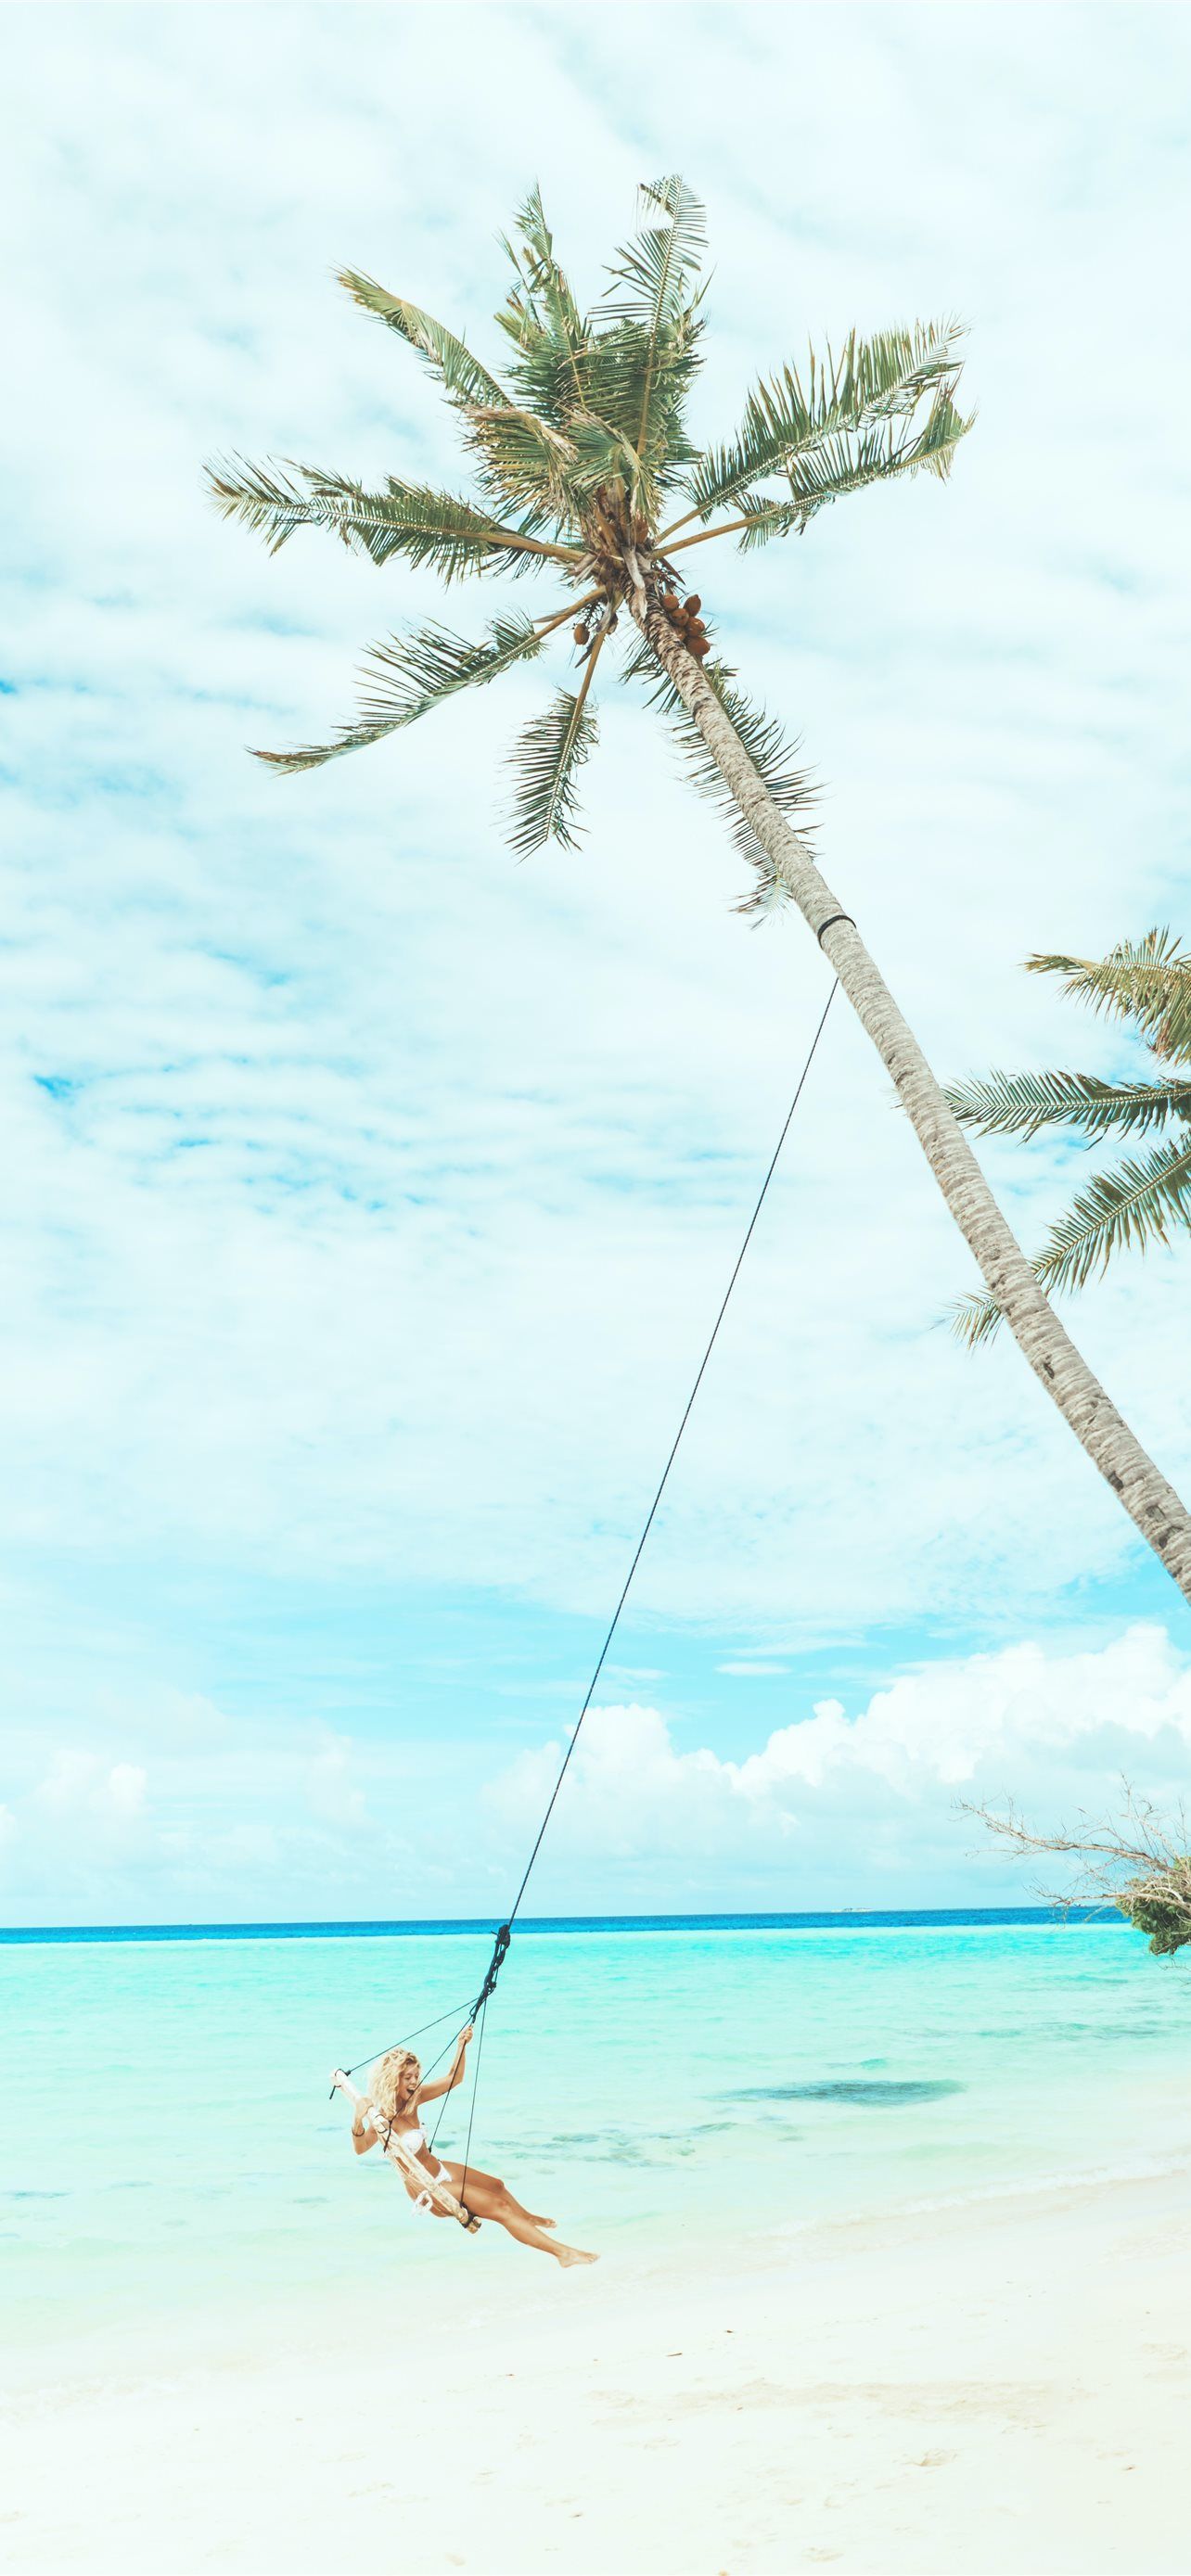 woman swing under coconut tree iPhone Wallpaper Free Download